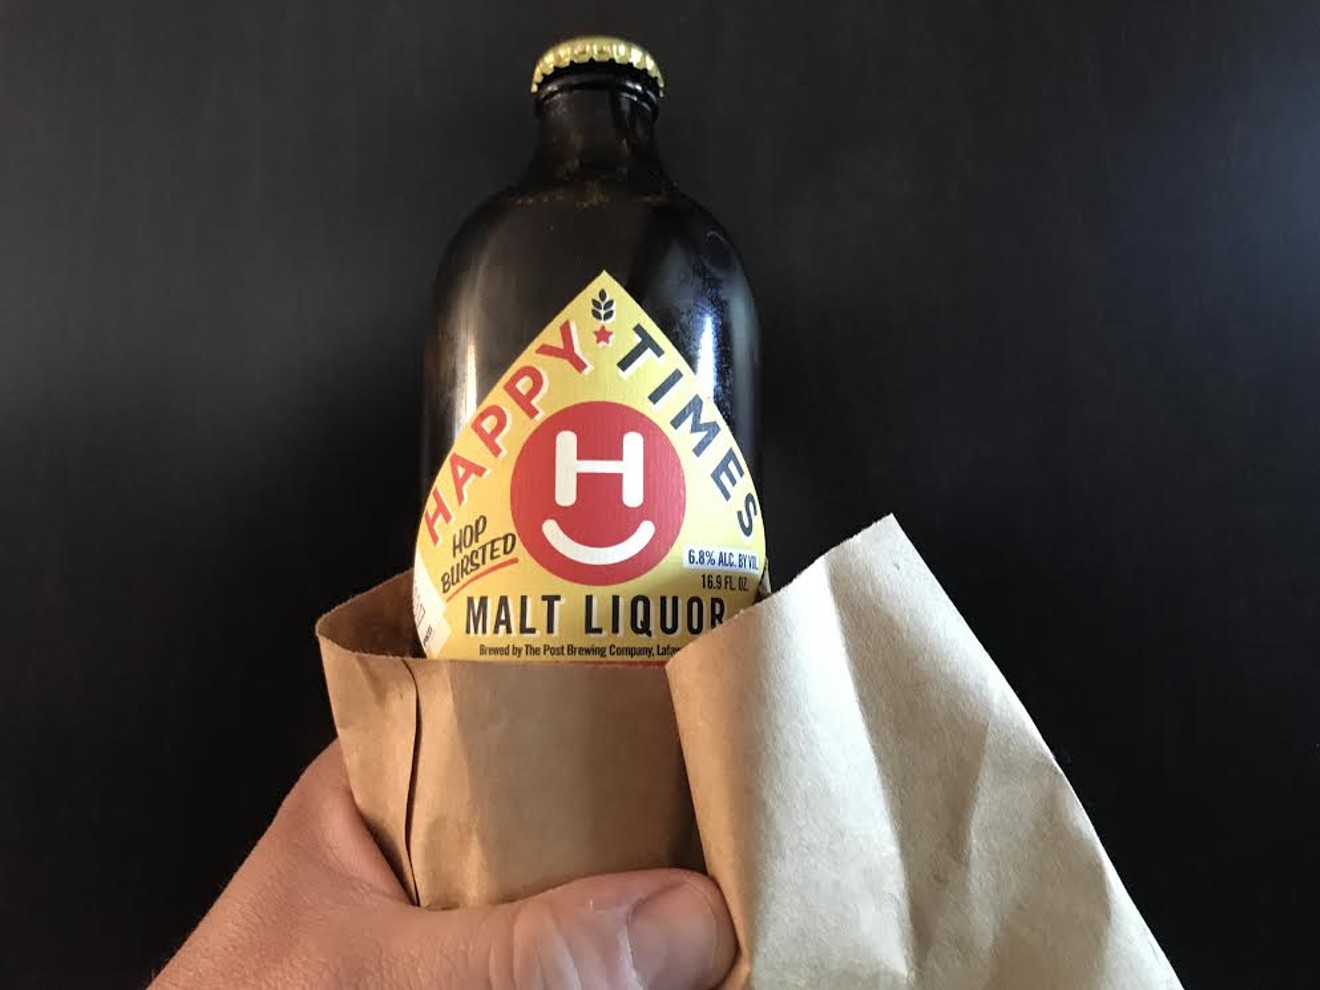 Malt liquor is no longer just for paper bags.